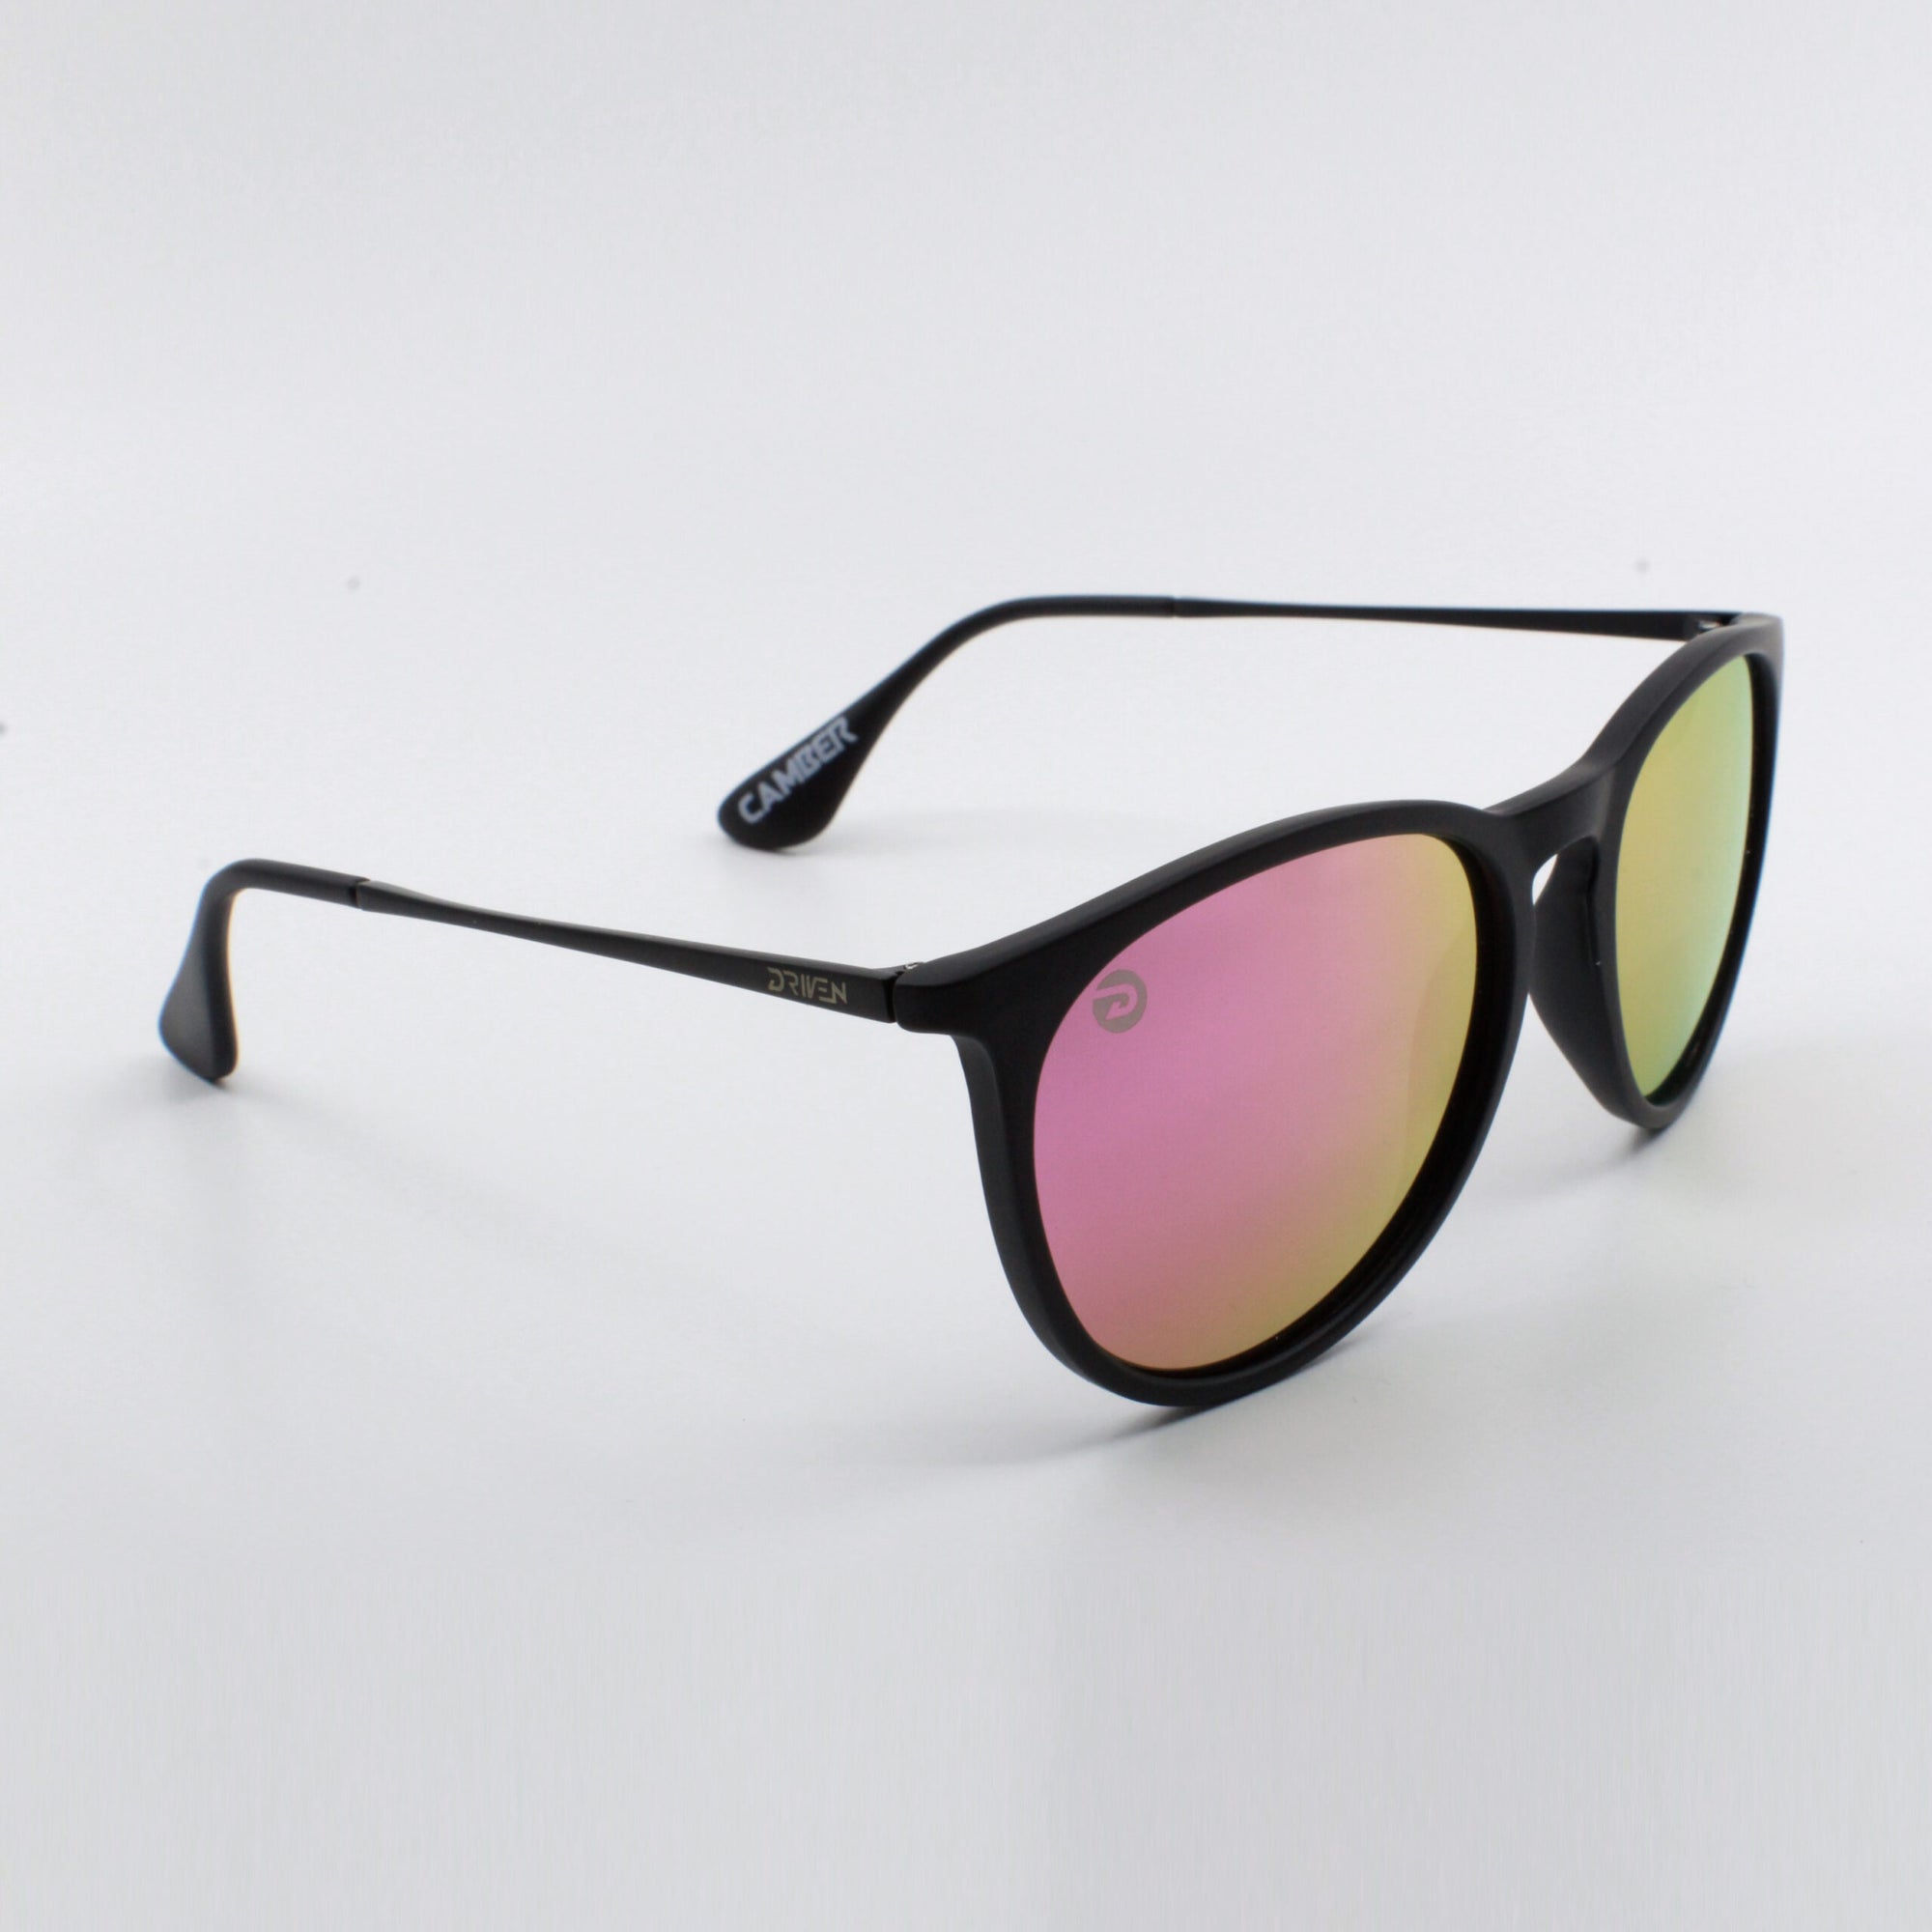 Driven Sunglasses - Camber Matte Black Black Acid Apparel